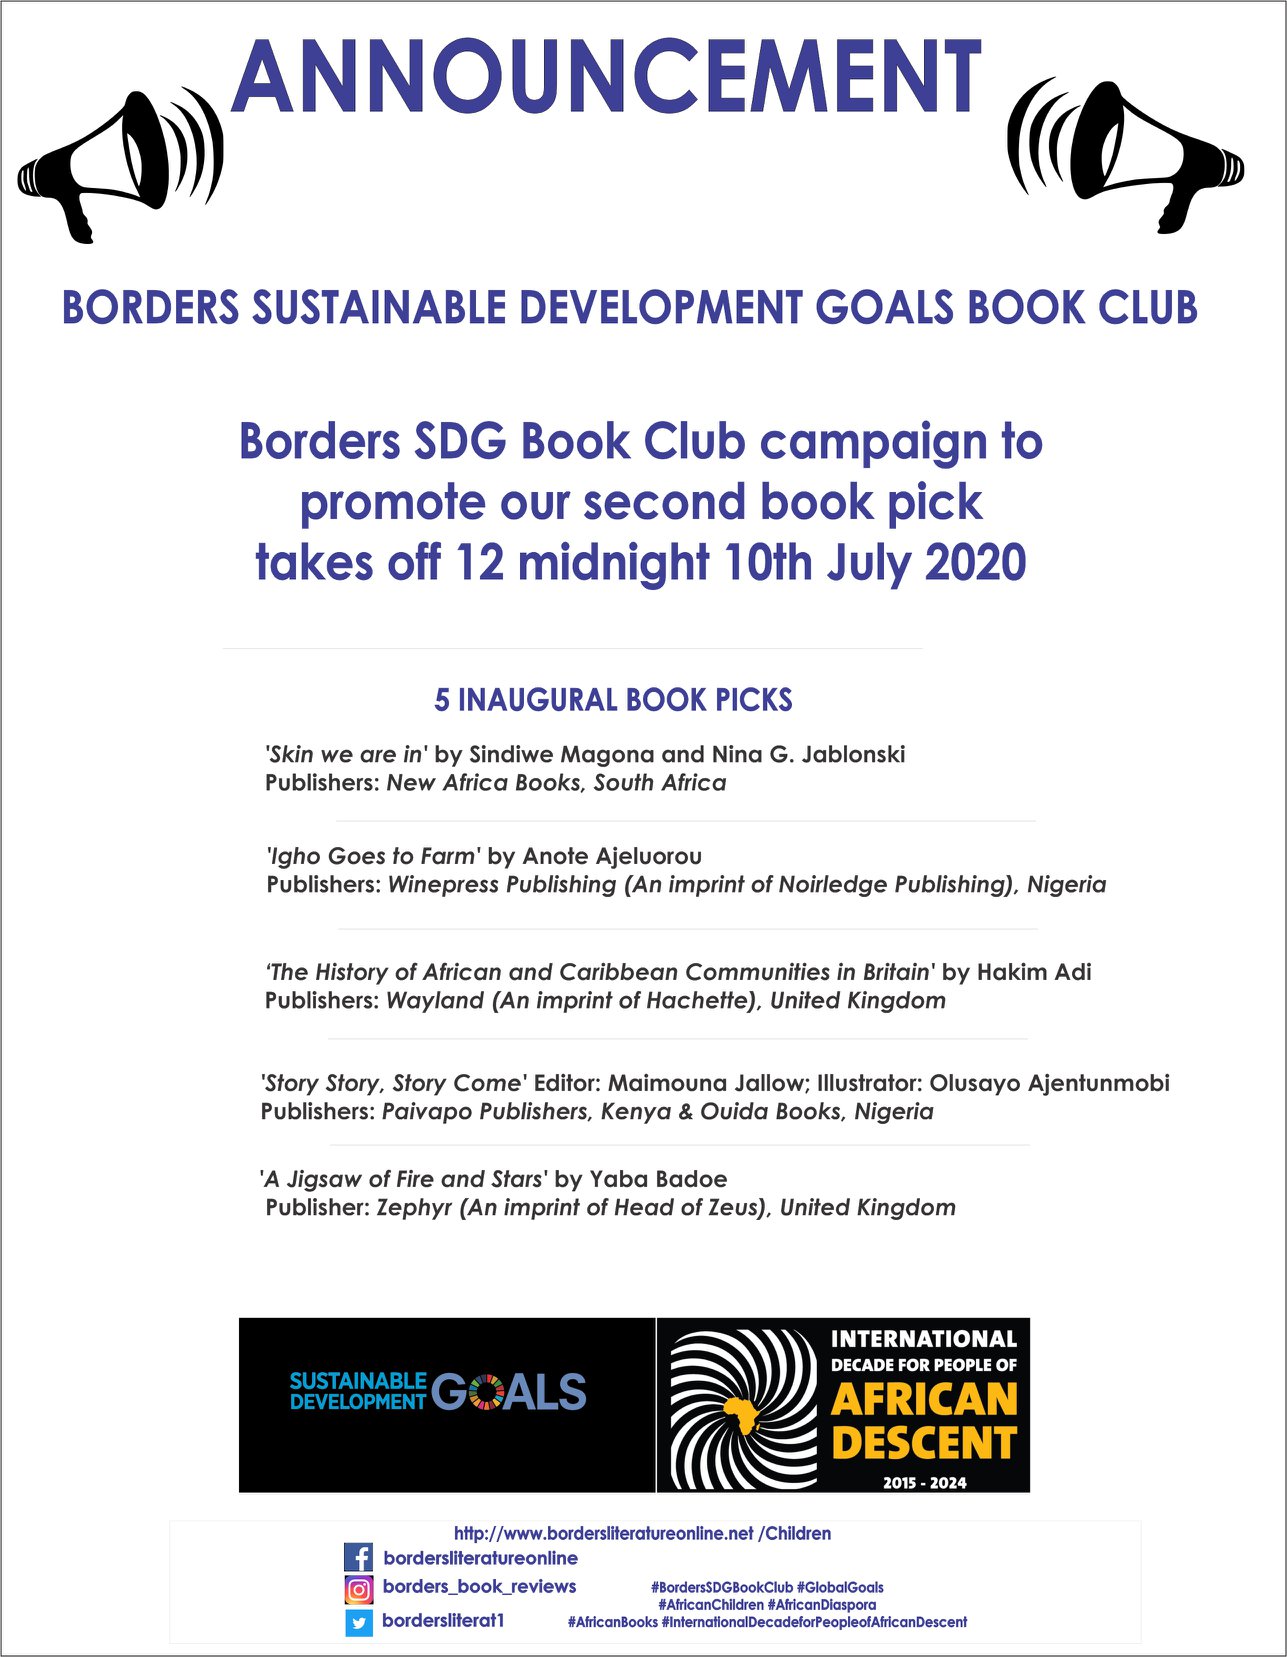 Borders SDG Book Club 5 Inaugural Book Picks July